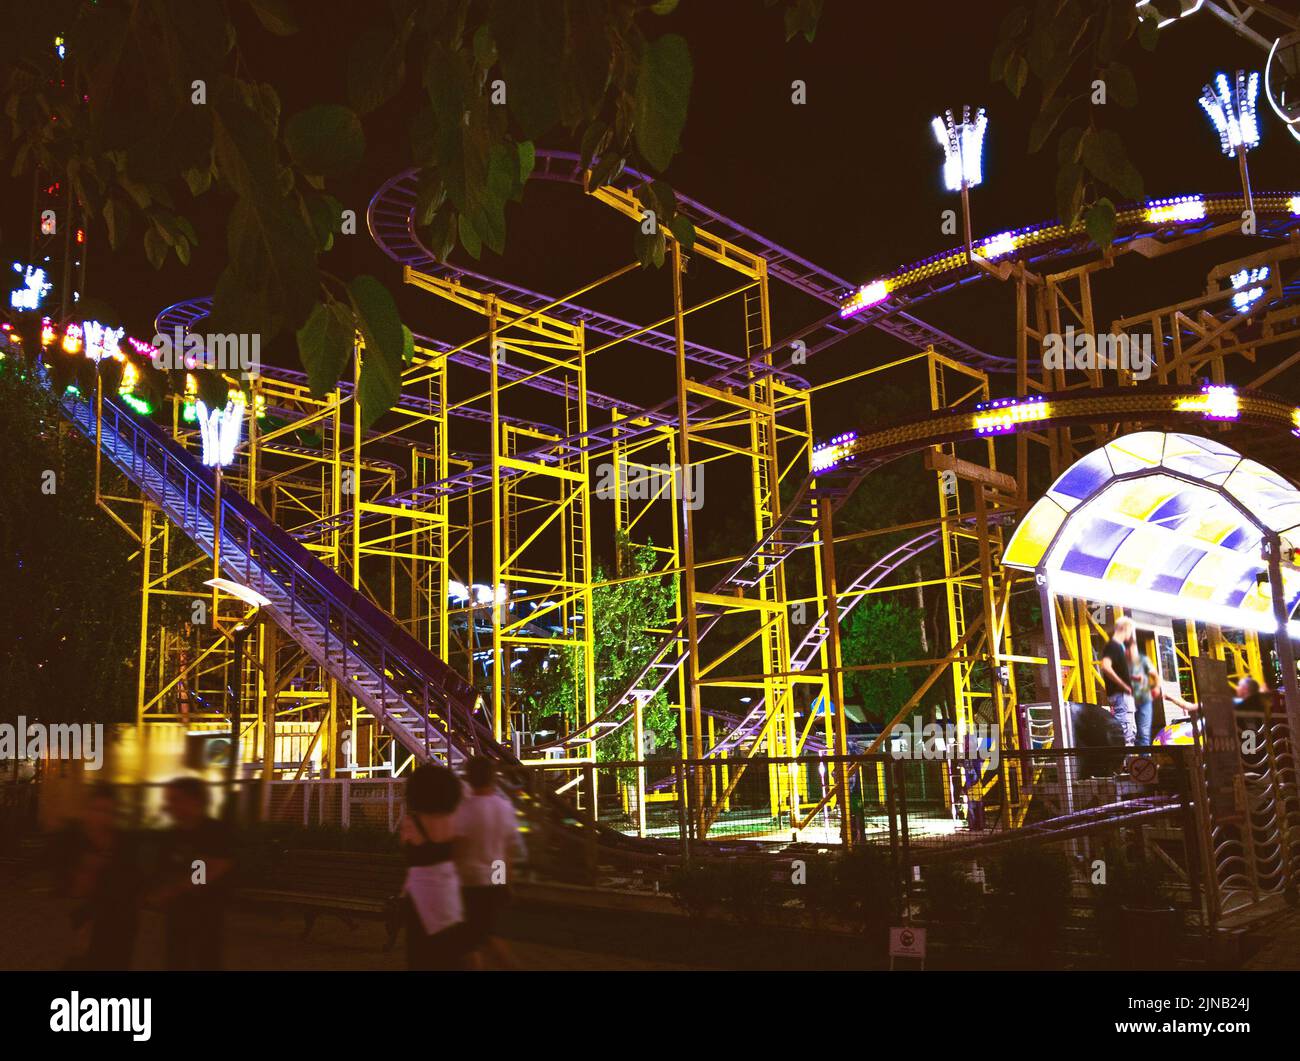 Theme Park in night city Stock Photo